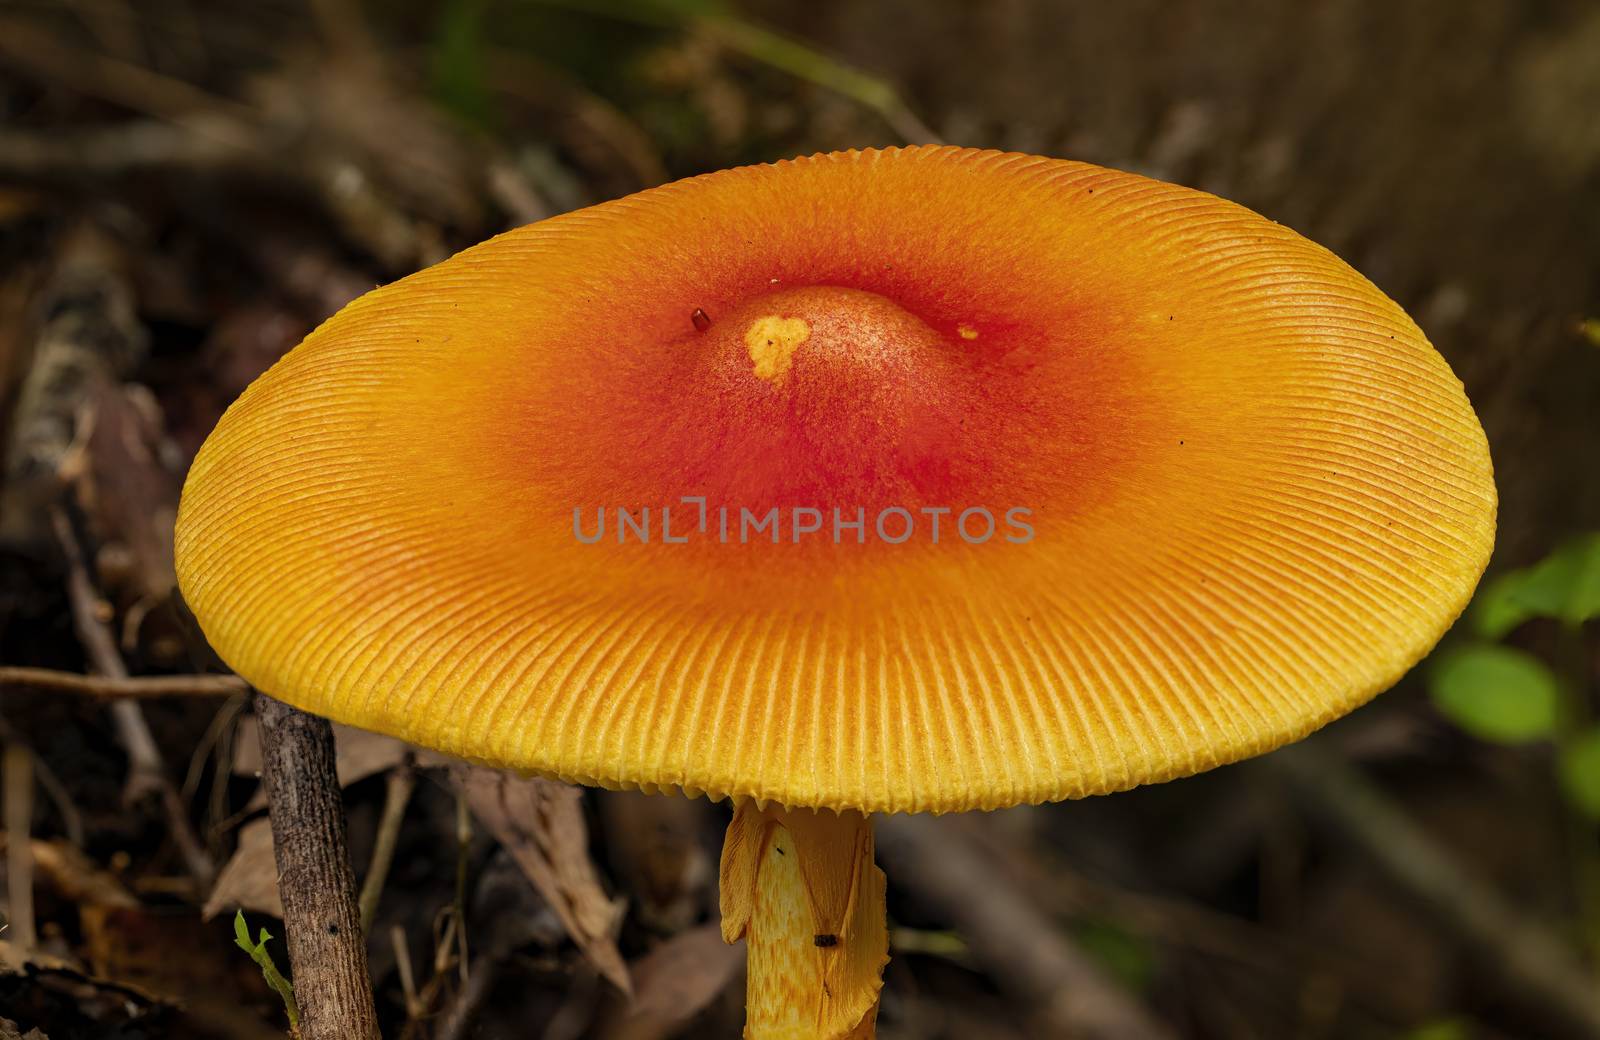 Large Yellow-orange Mushroom Glows in the Sunlight by CharlieFloyd